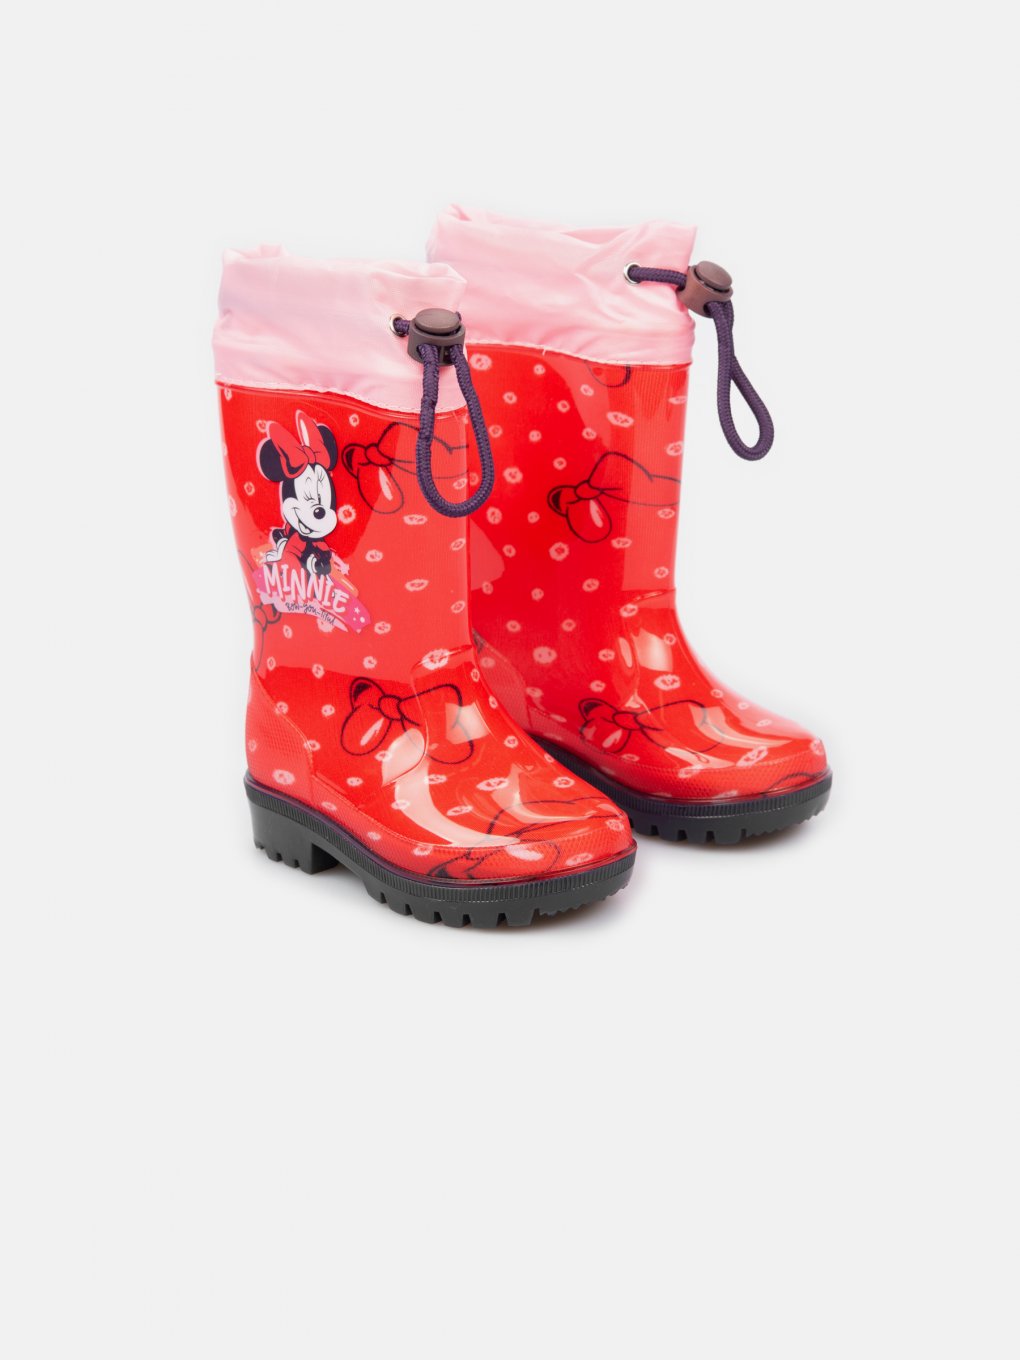 Minnie Mouse wellington boots